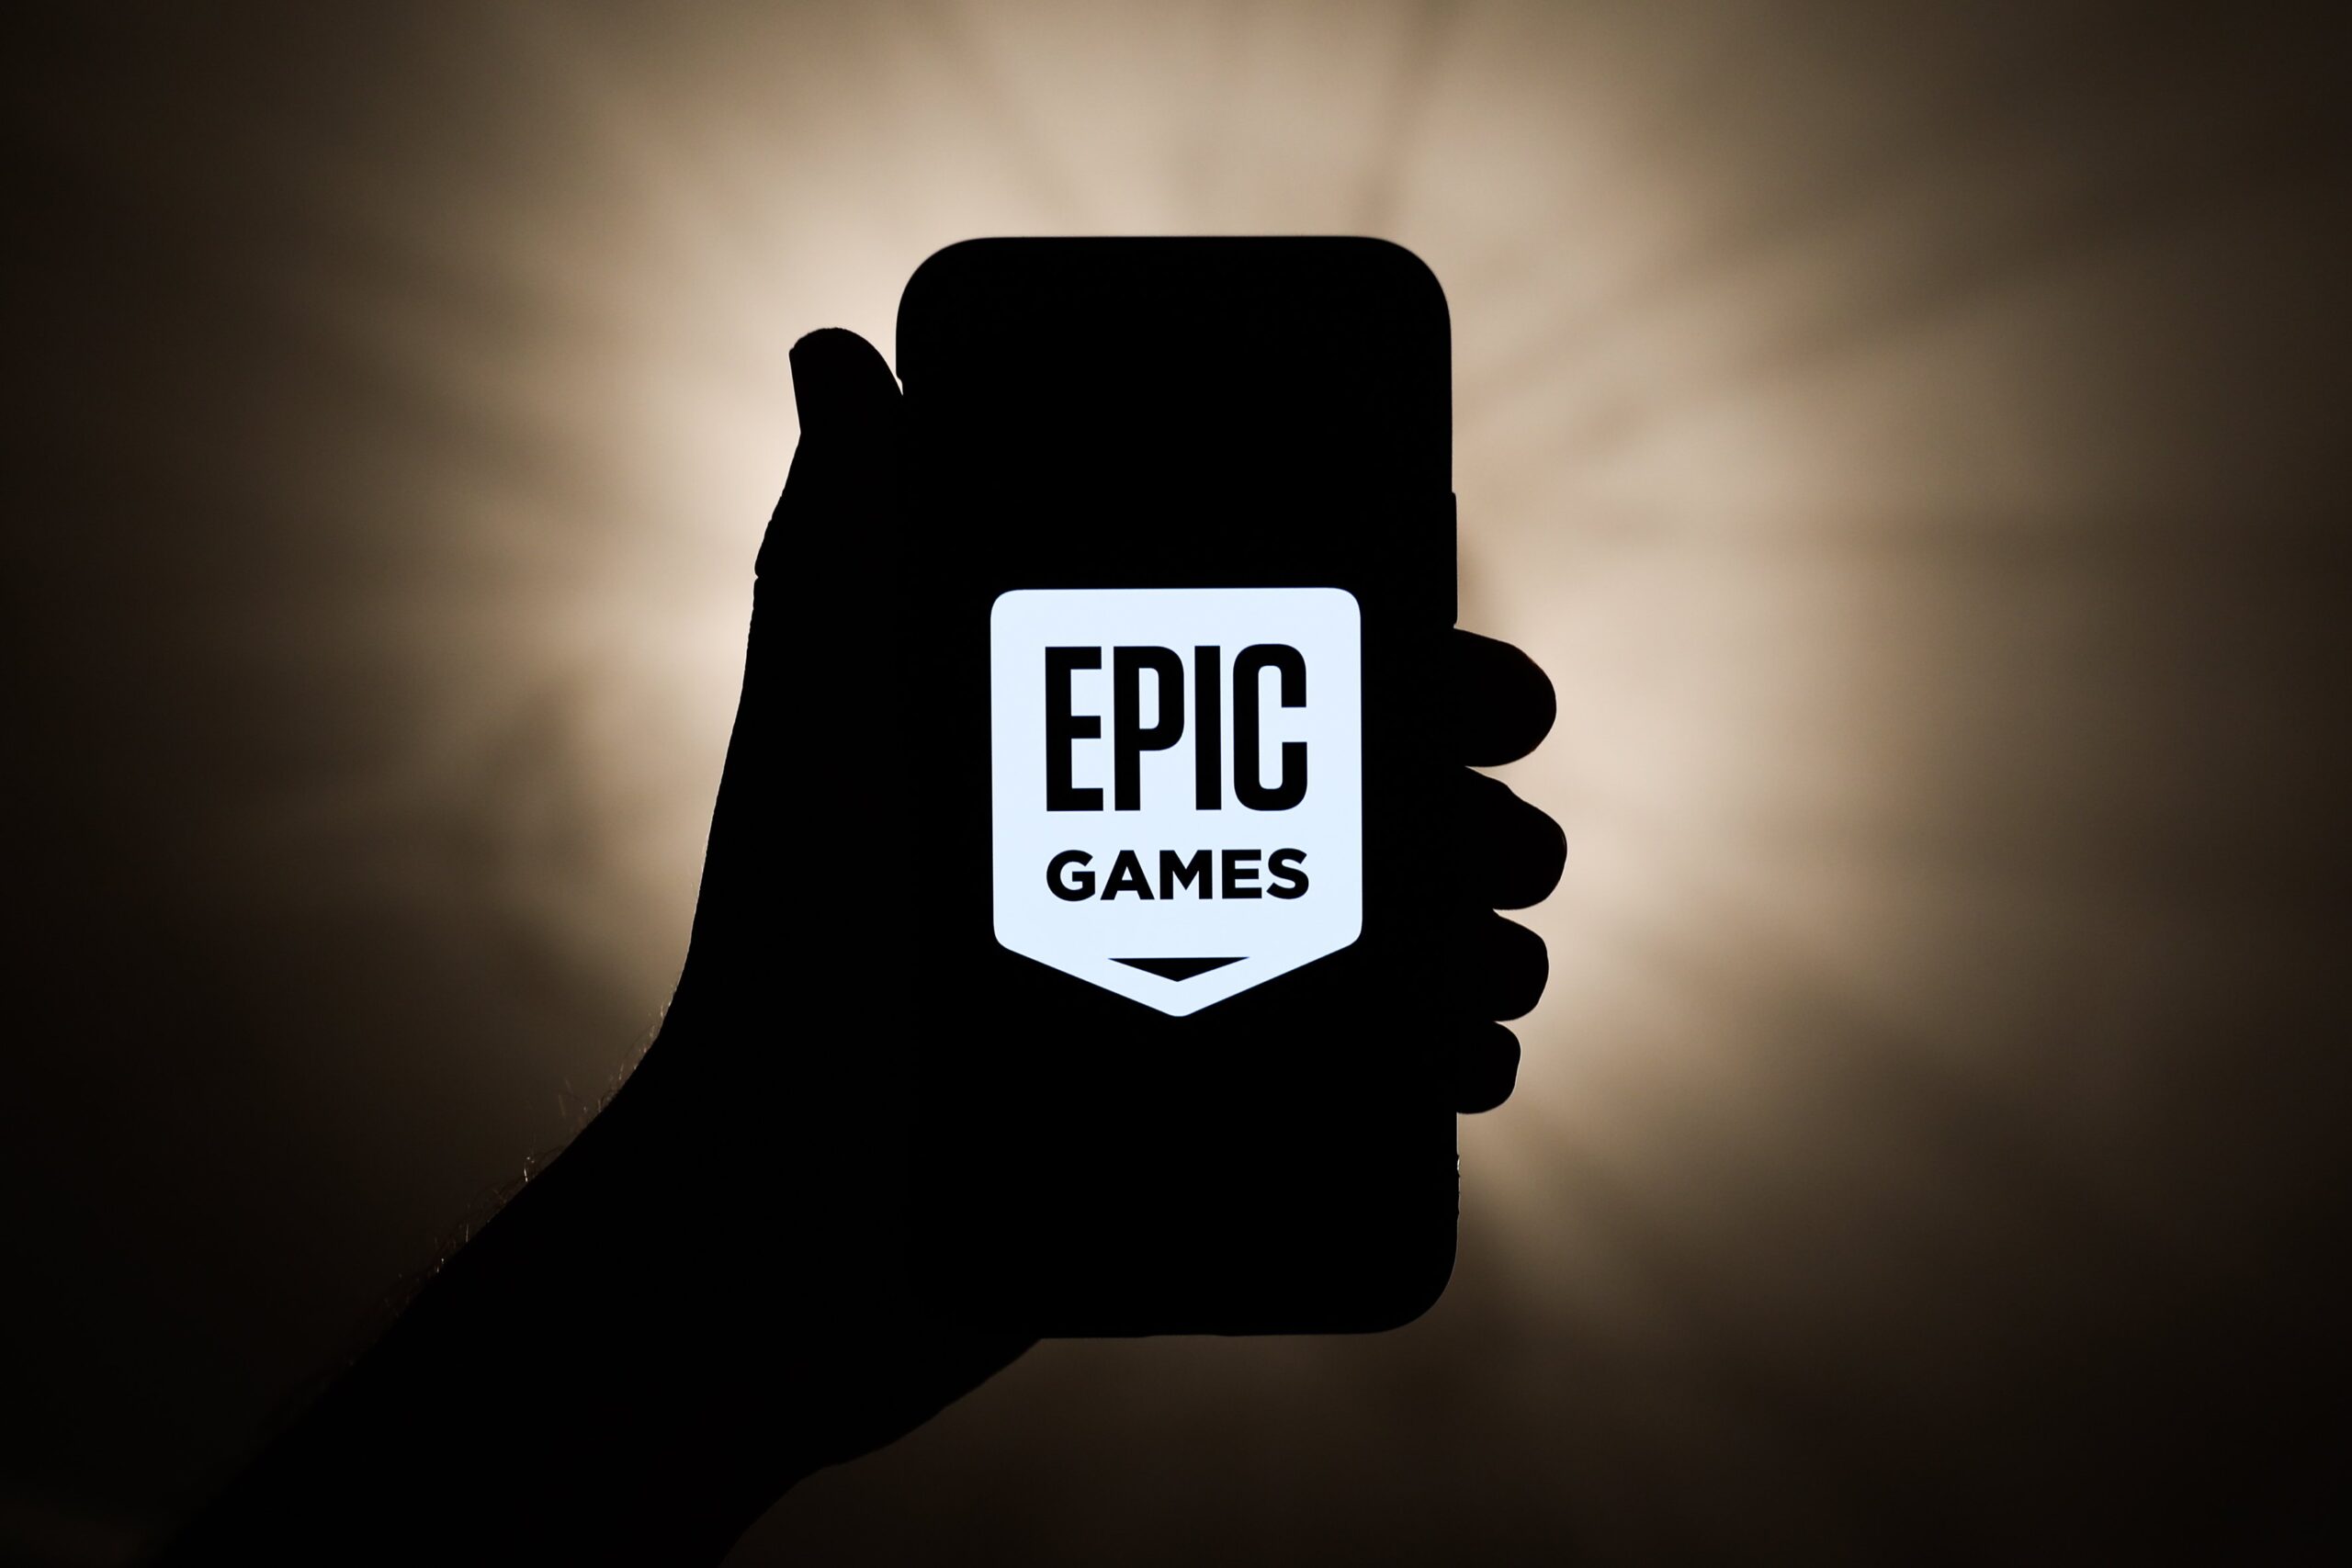 Epic Games logo on smartphone